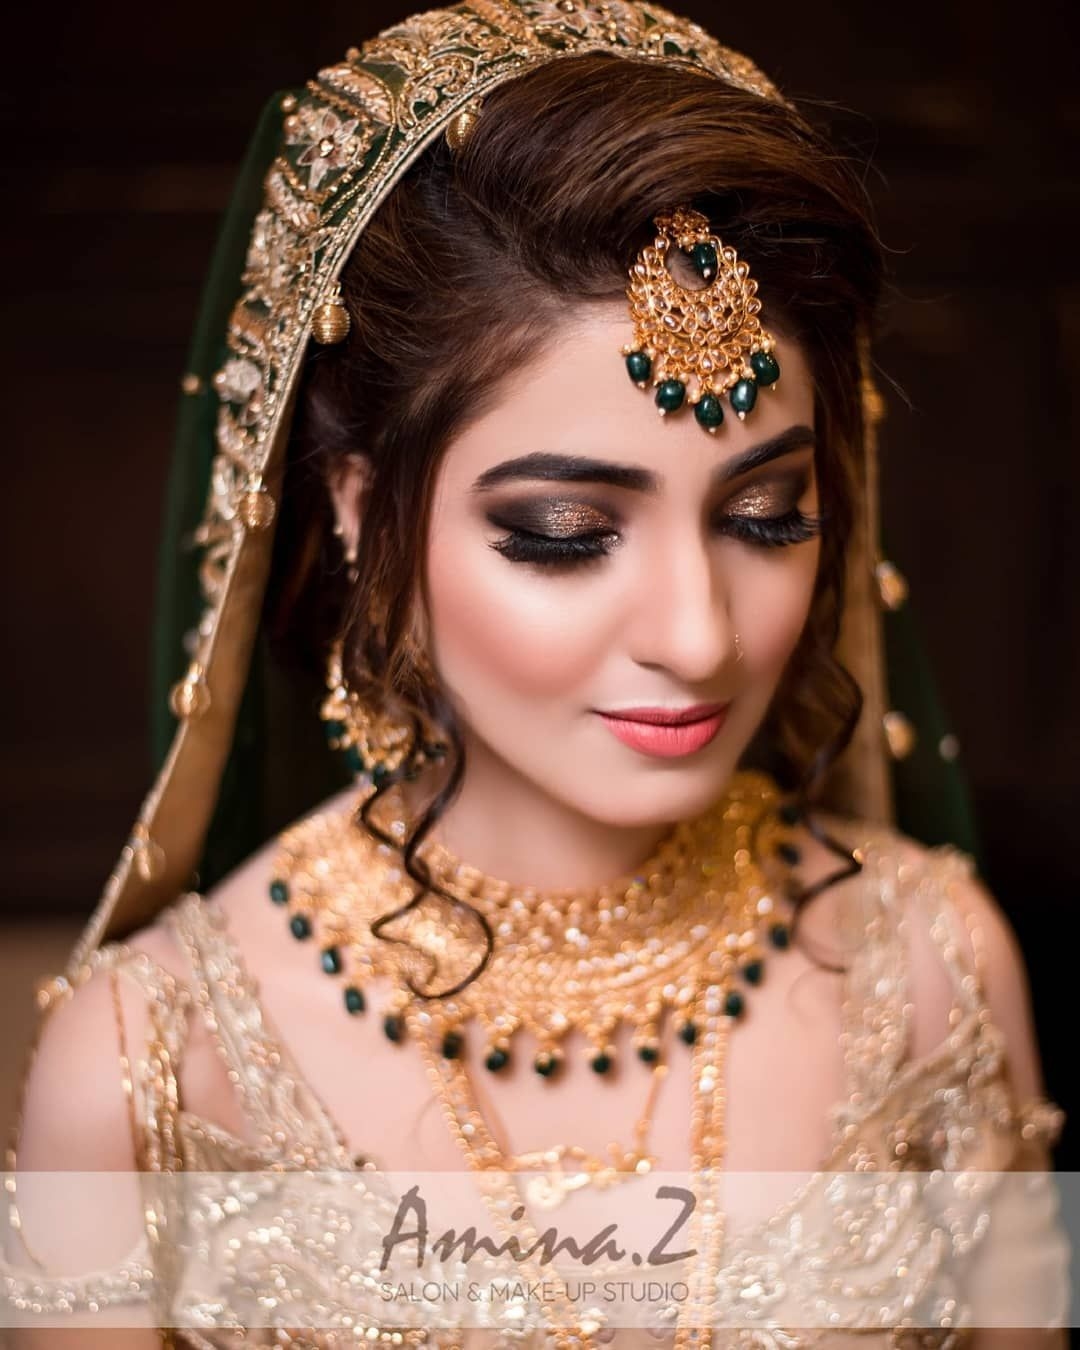 Aminaz Salon Profile Picture